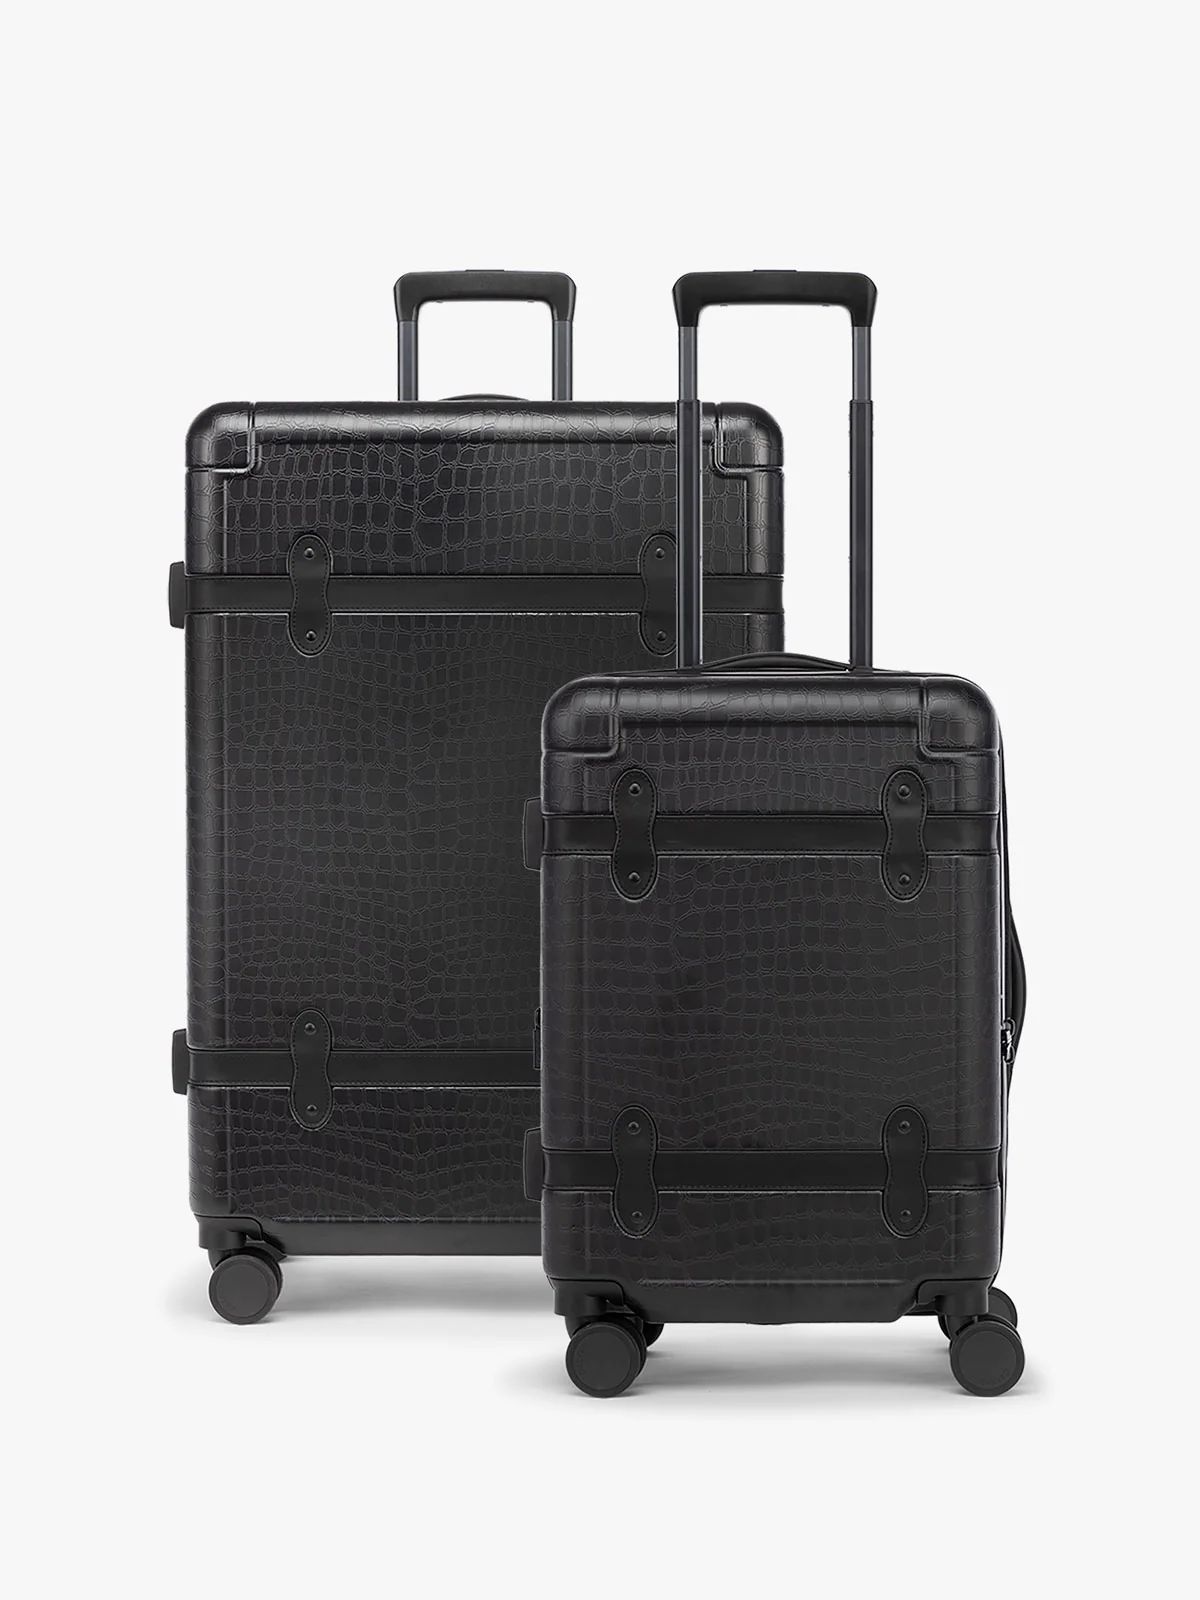 Trnk Carry-On Luggage | CALPAK Travel